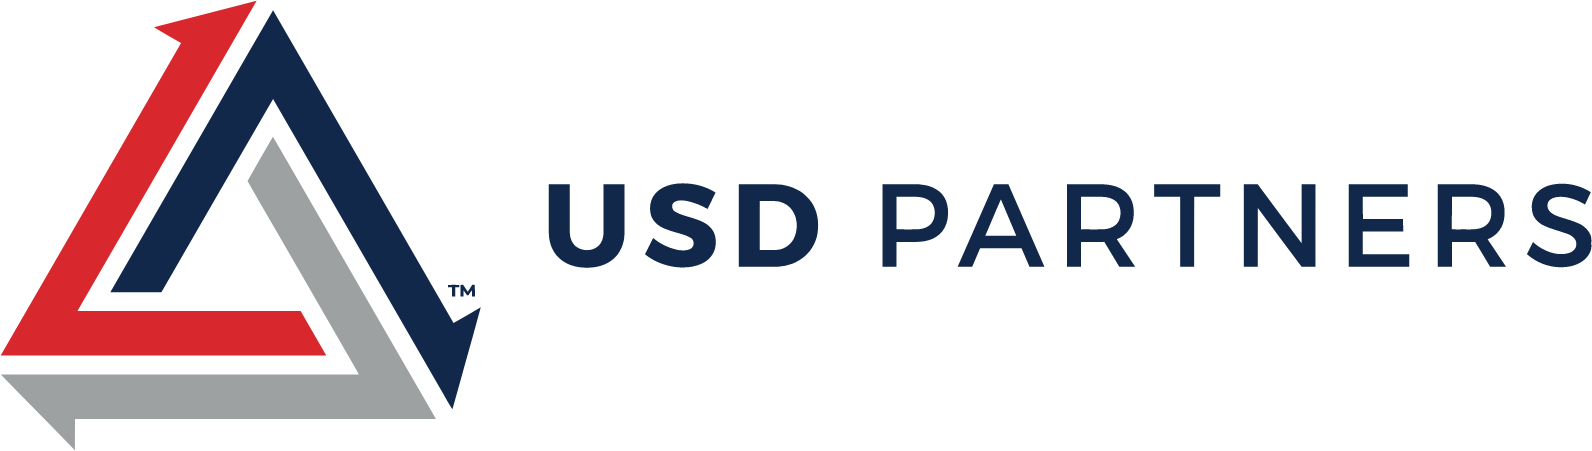 USD Partners
 logo large (transparent PNG)